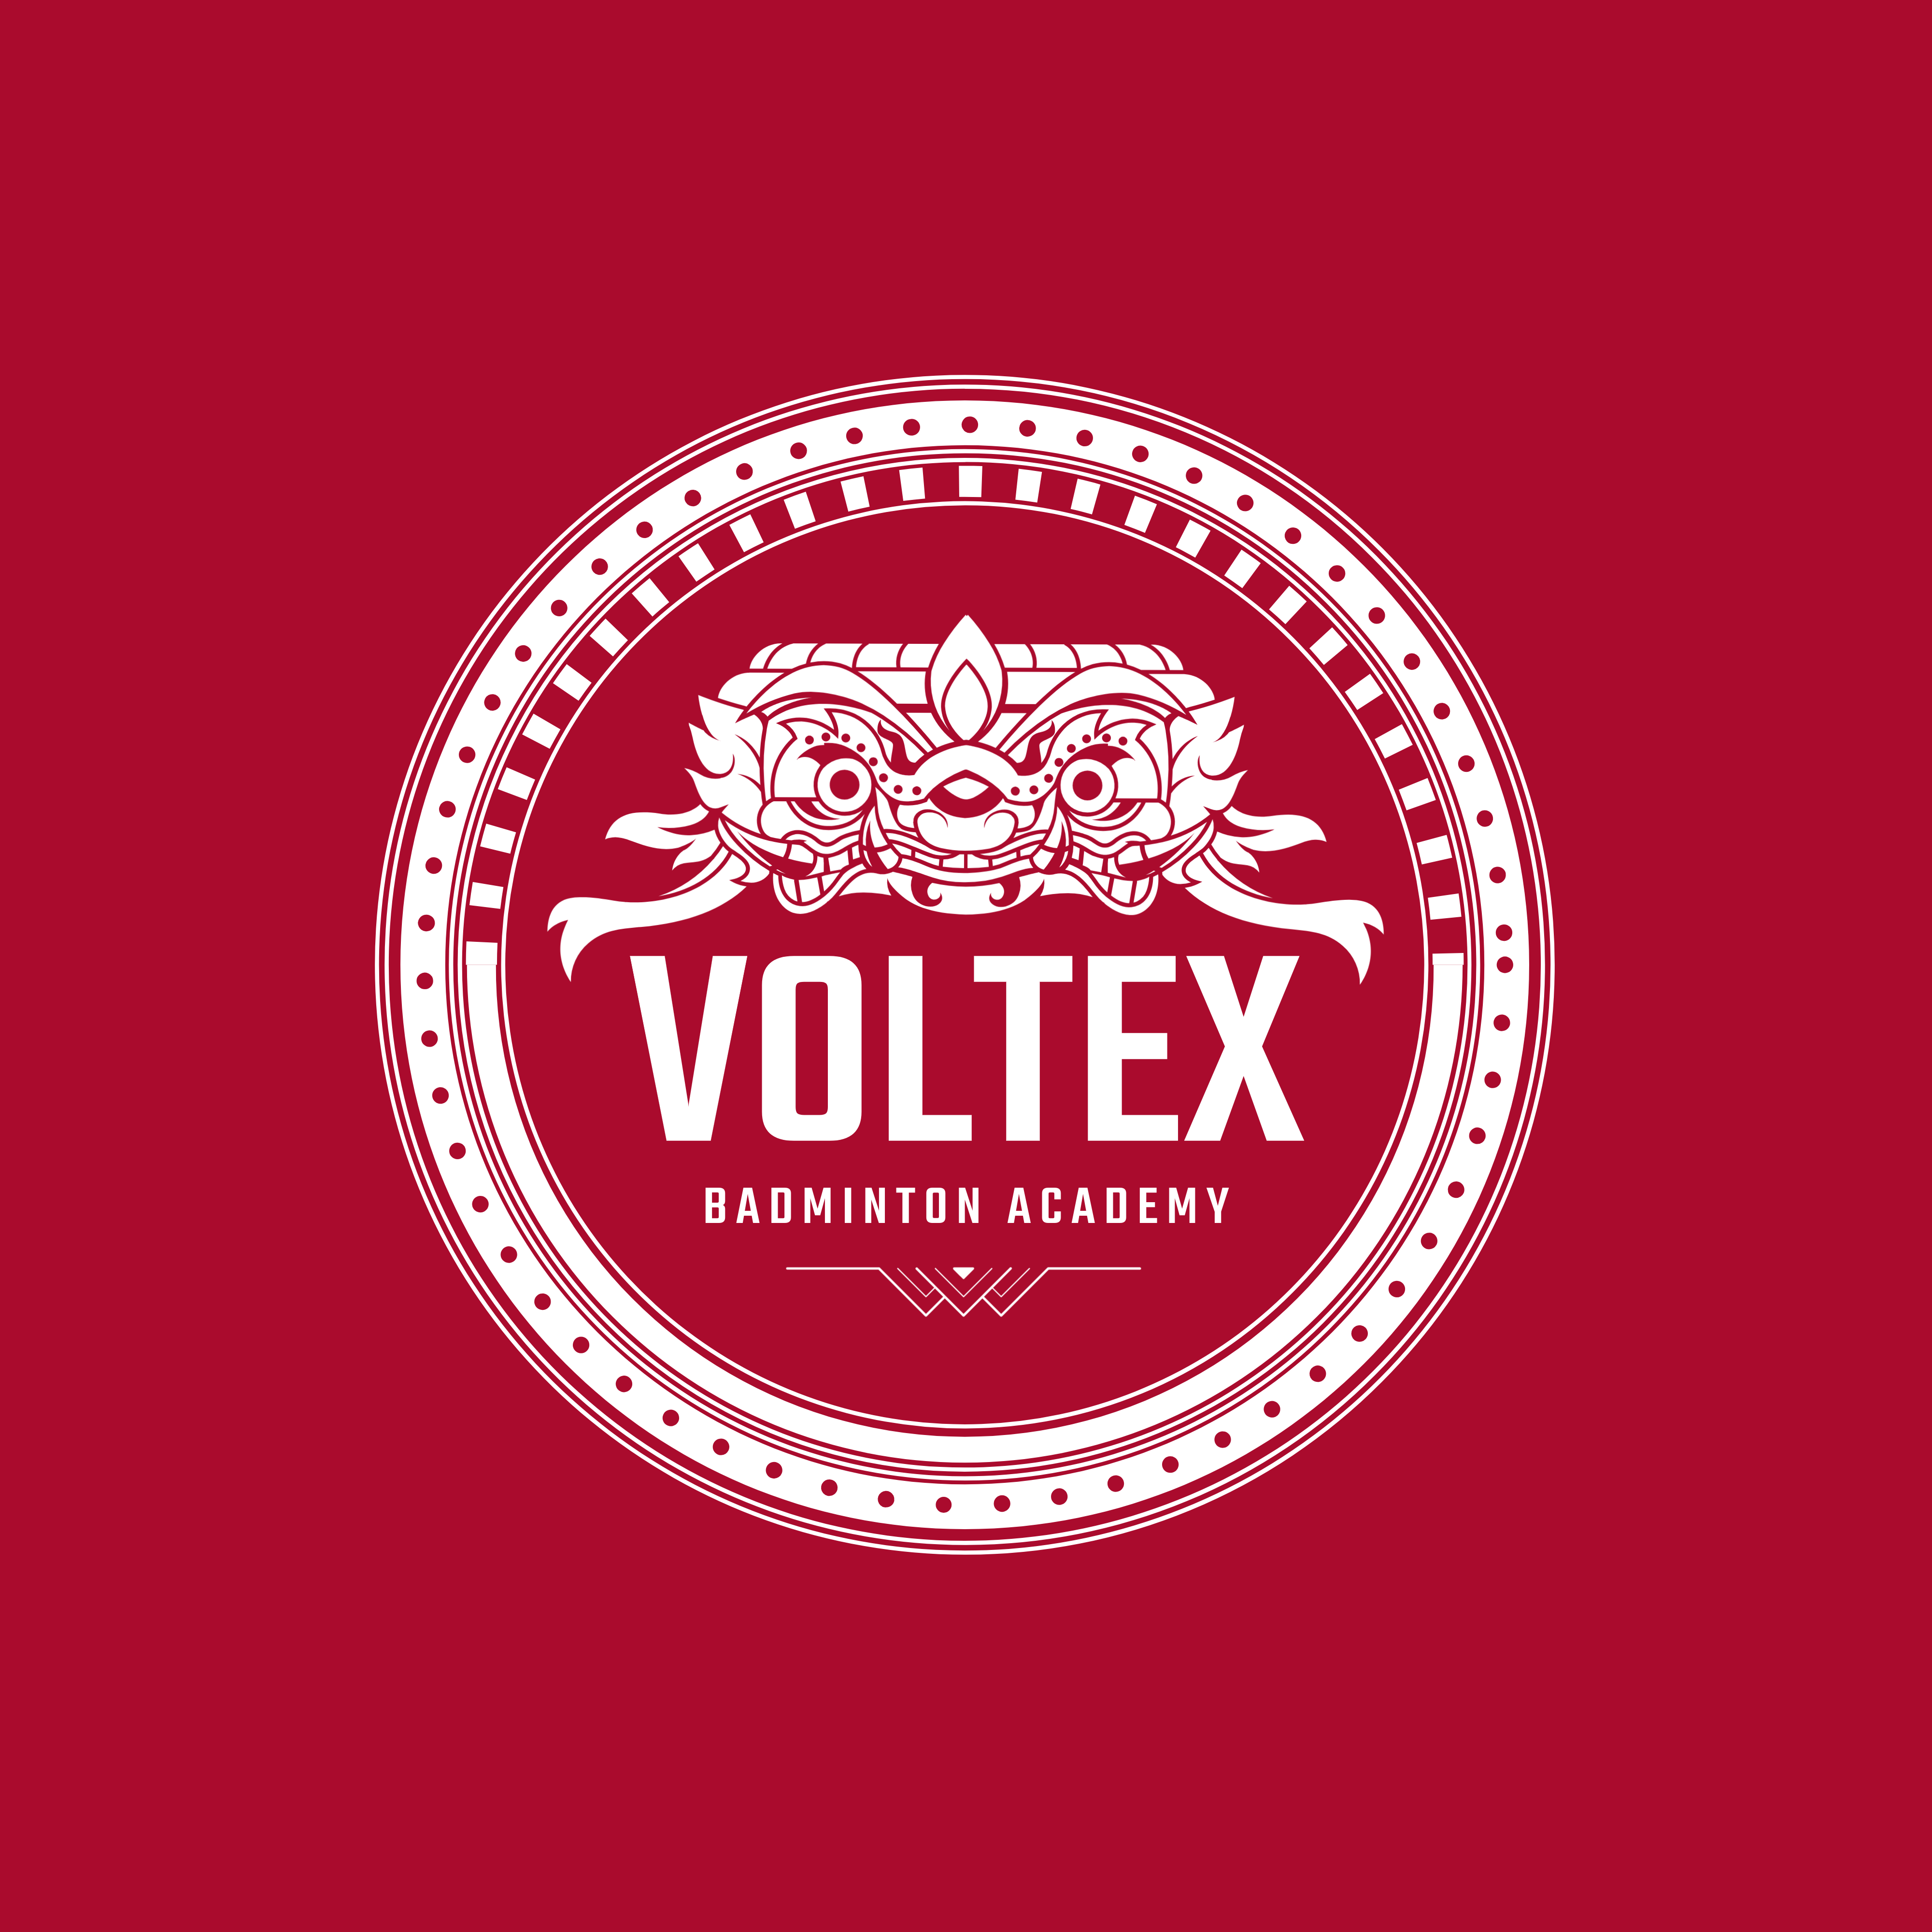 Voltex Badminton Academy Logo